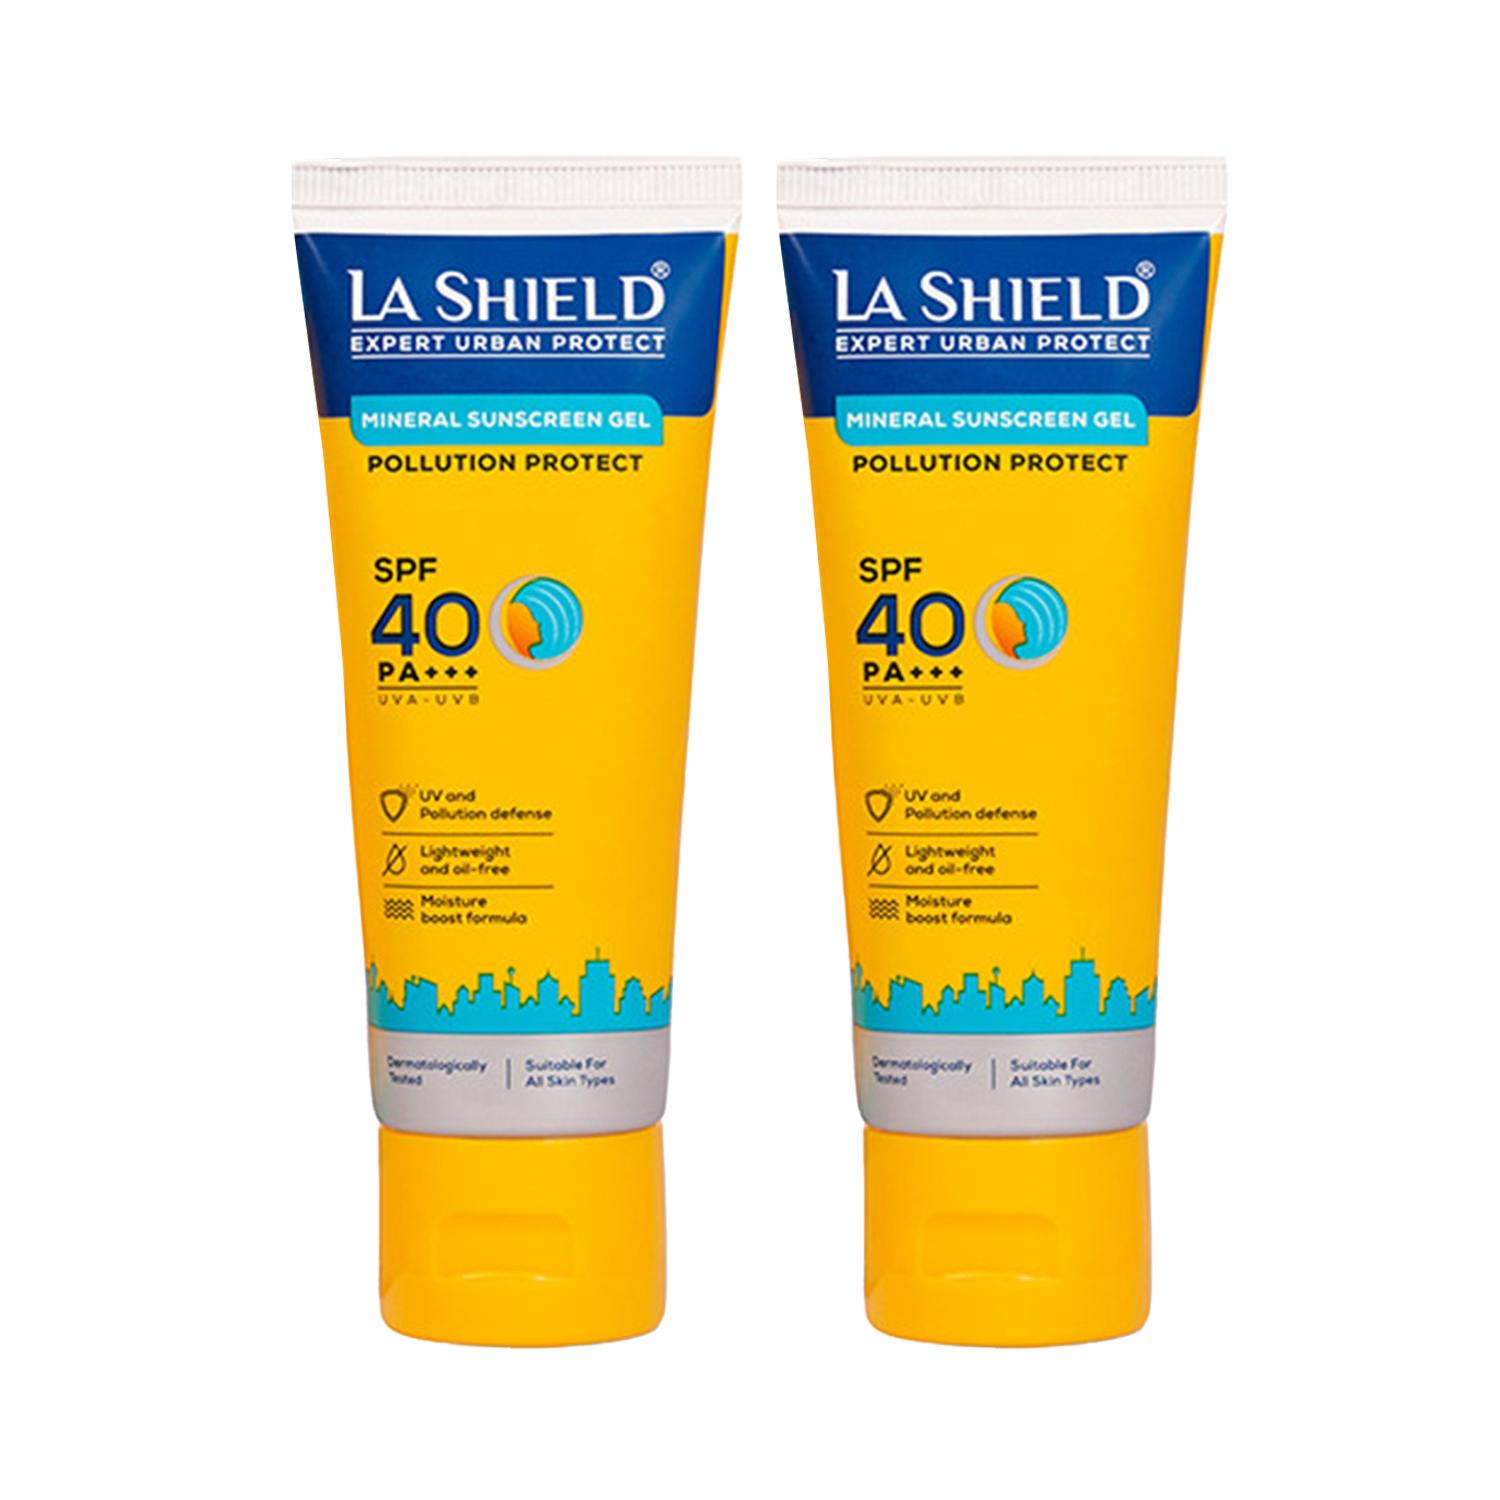 La Shield | La Shield Pollution Protect Mineral Sunscreen Gel SPF 50 Pack of 2 (50 g)